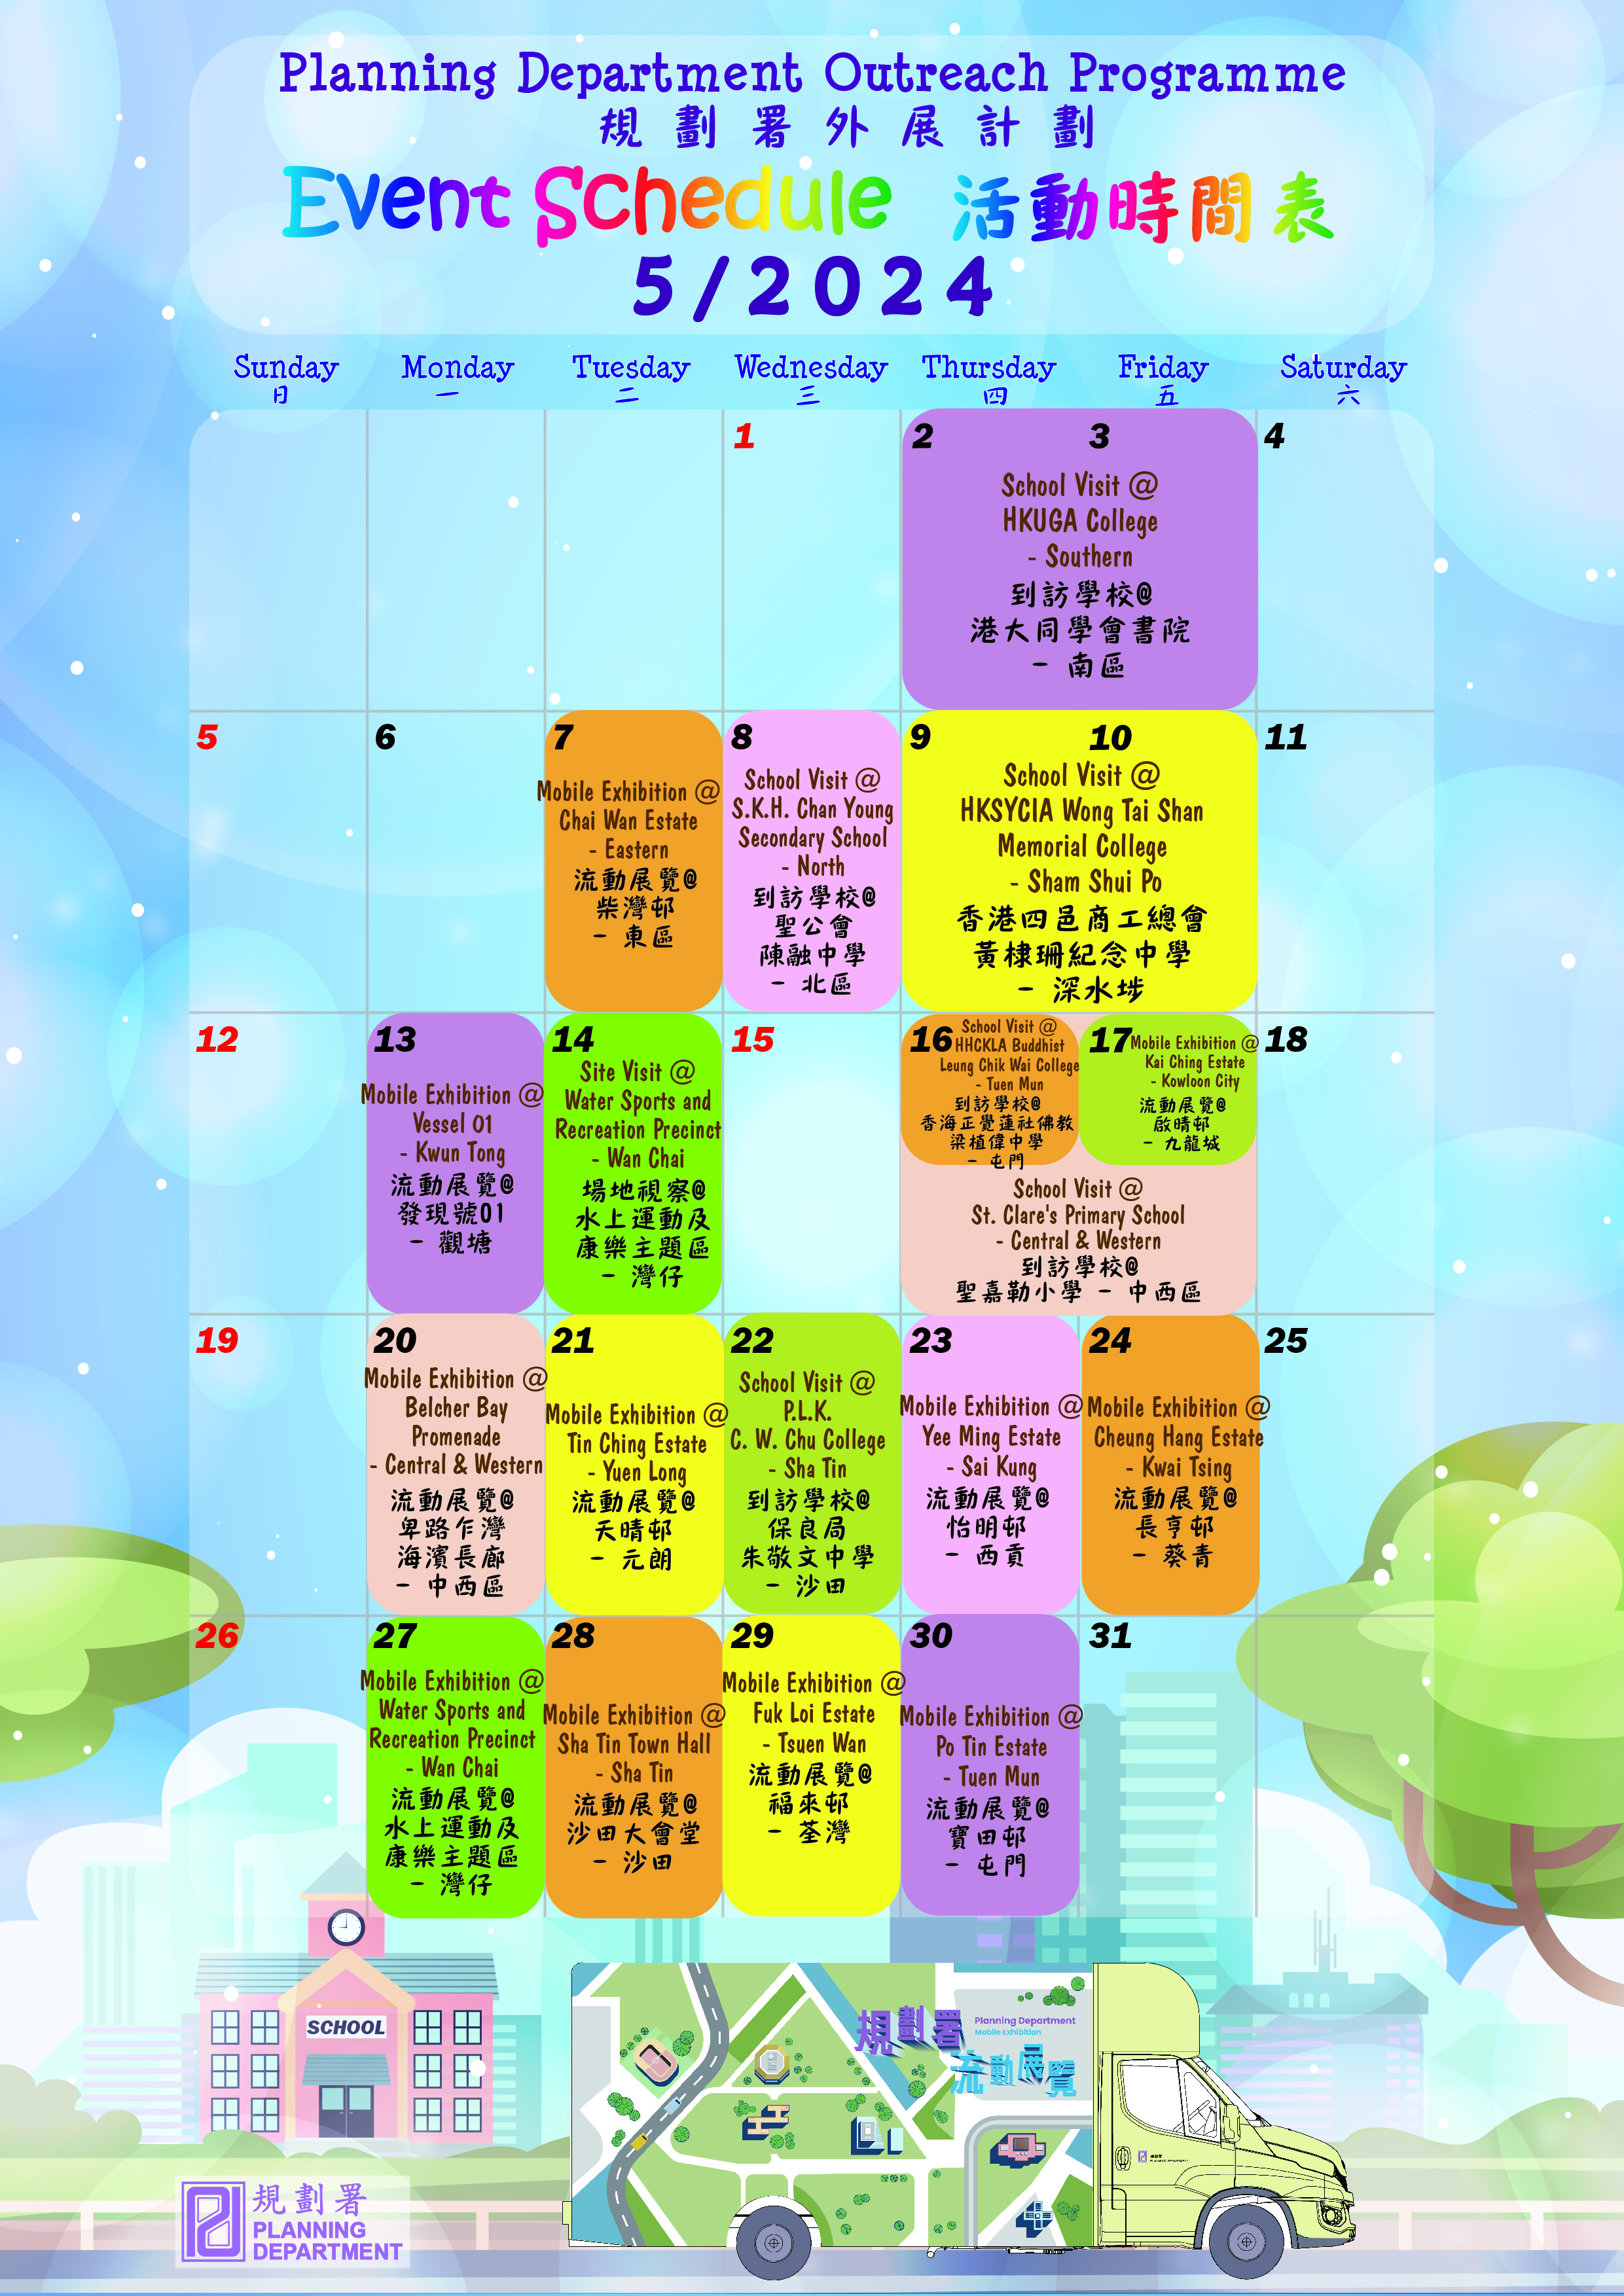 Outreach Programme Schedule